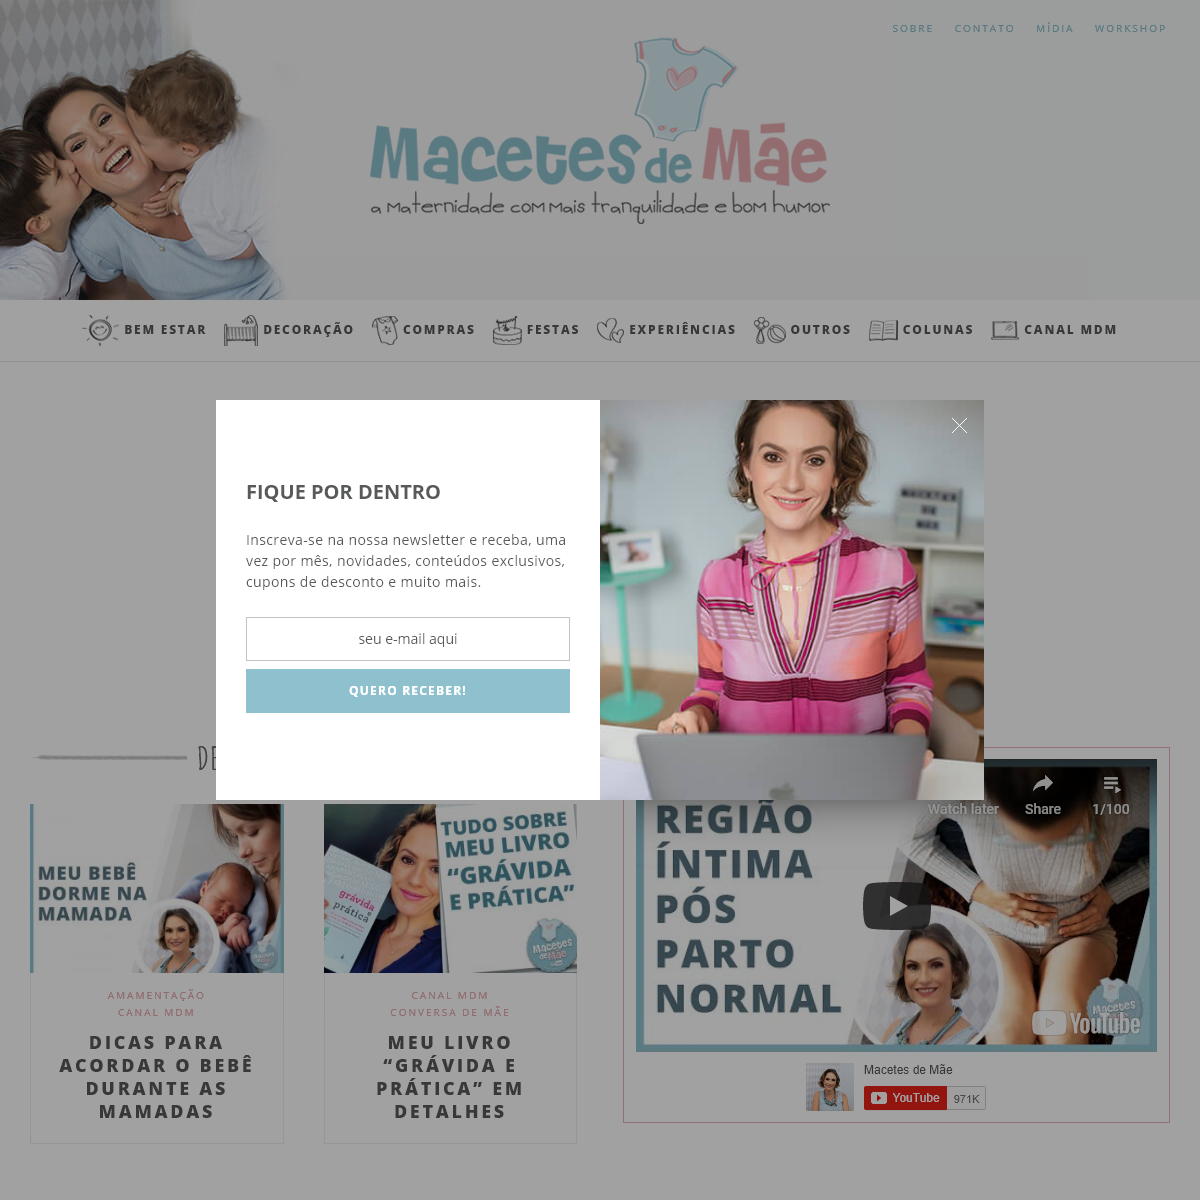 A complete backup of macetesdemae.com